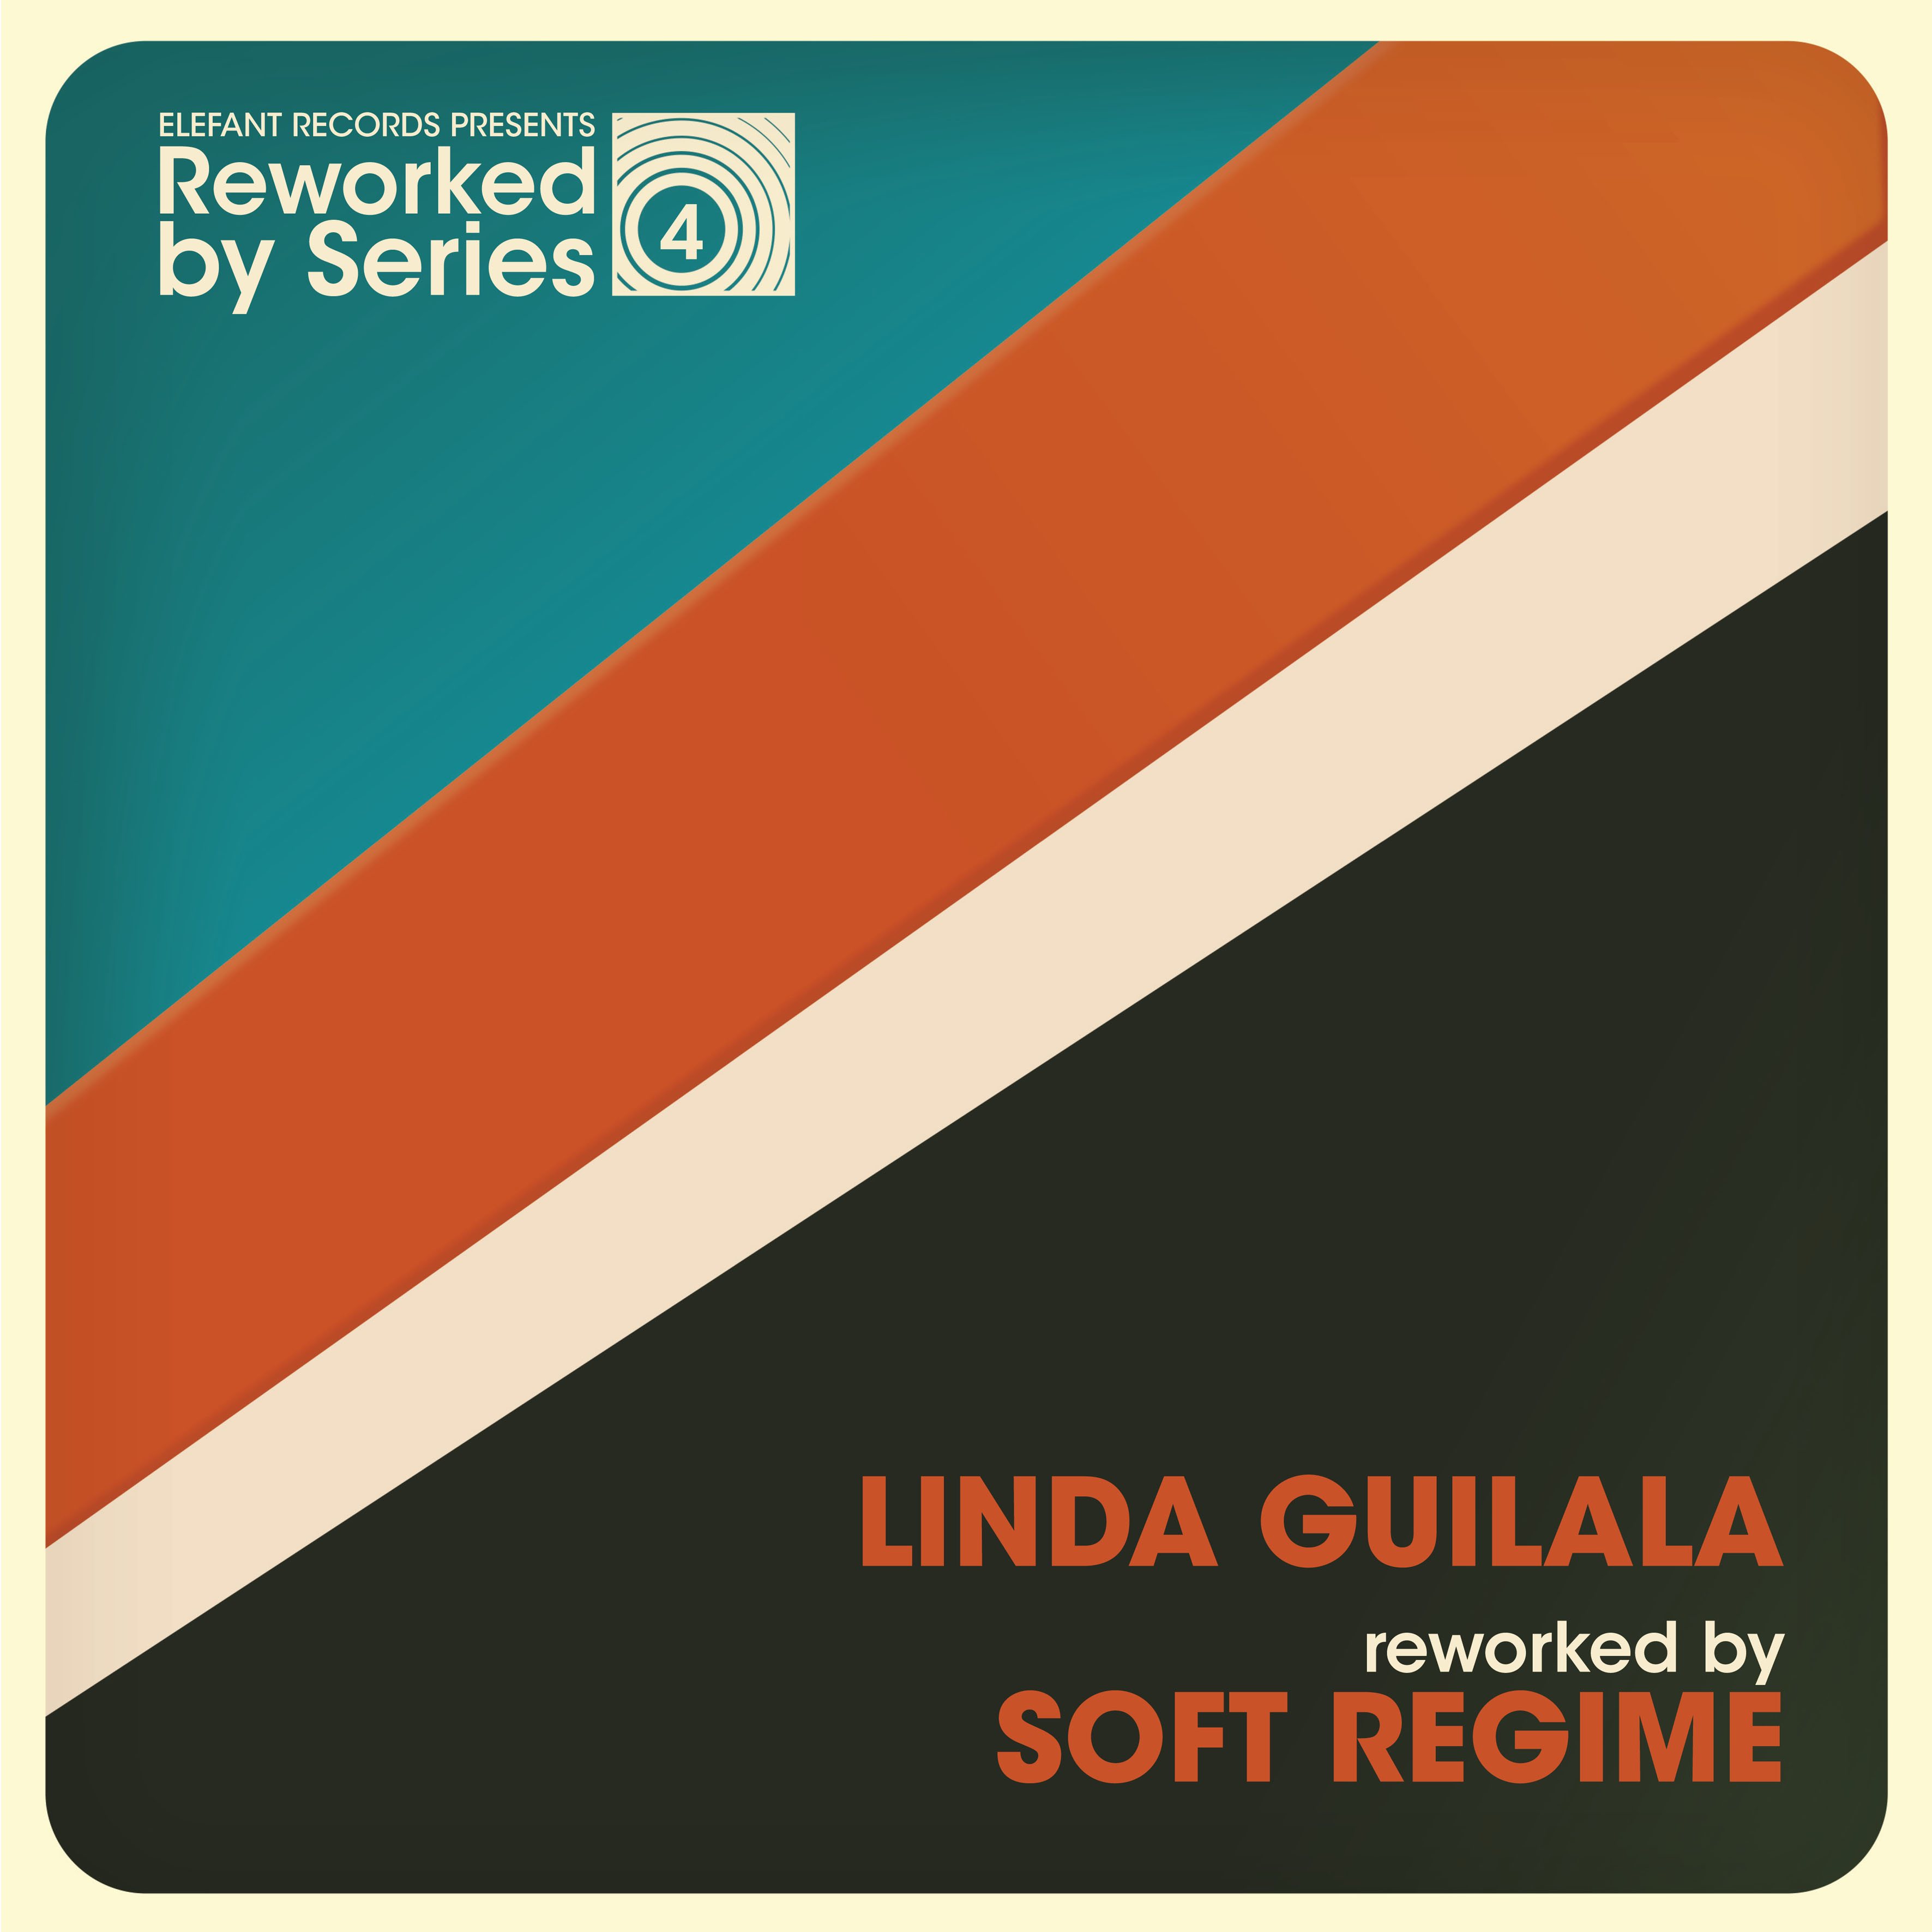 Linda Guilala reworked by Soft Regime